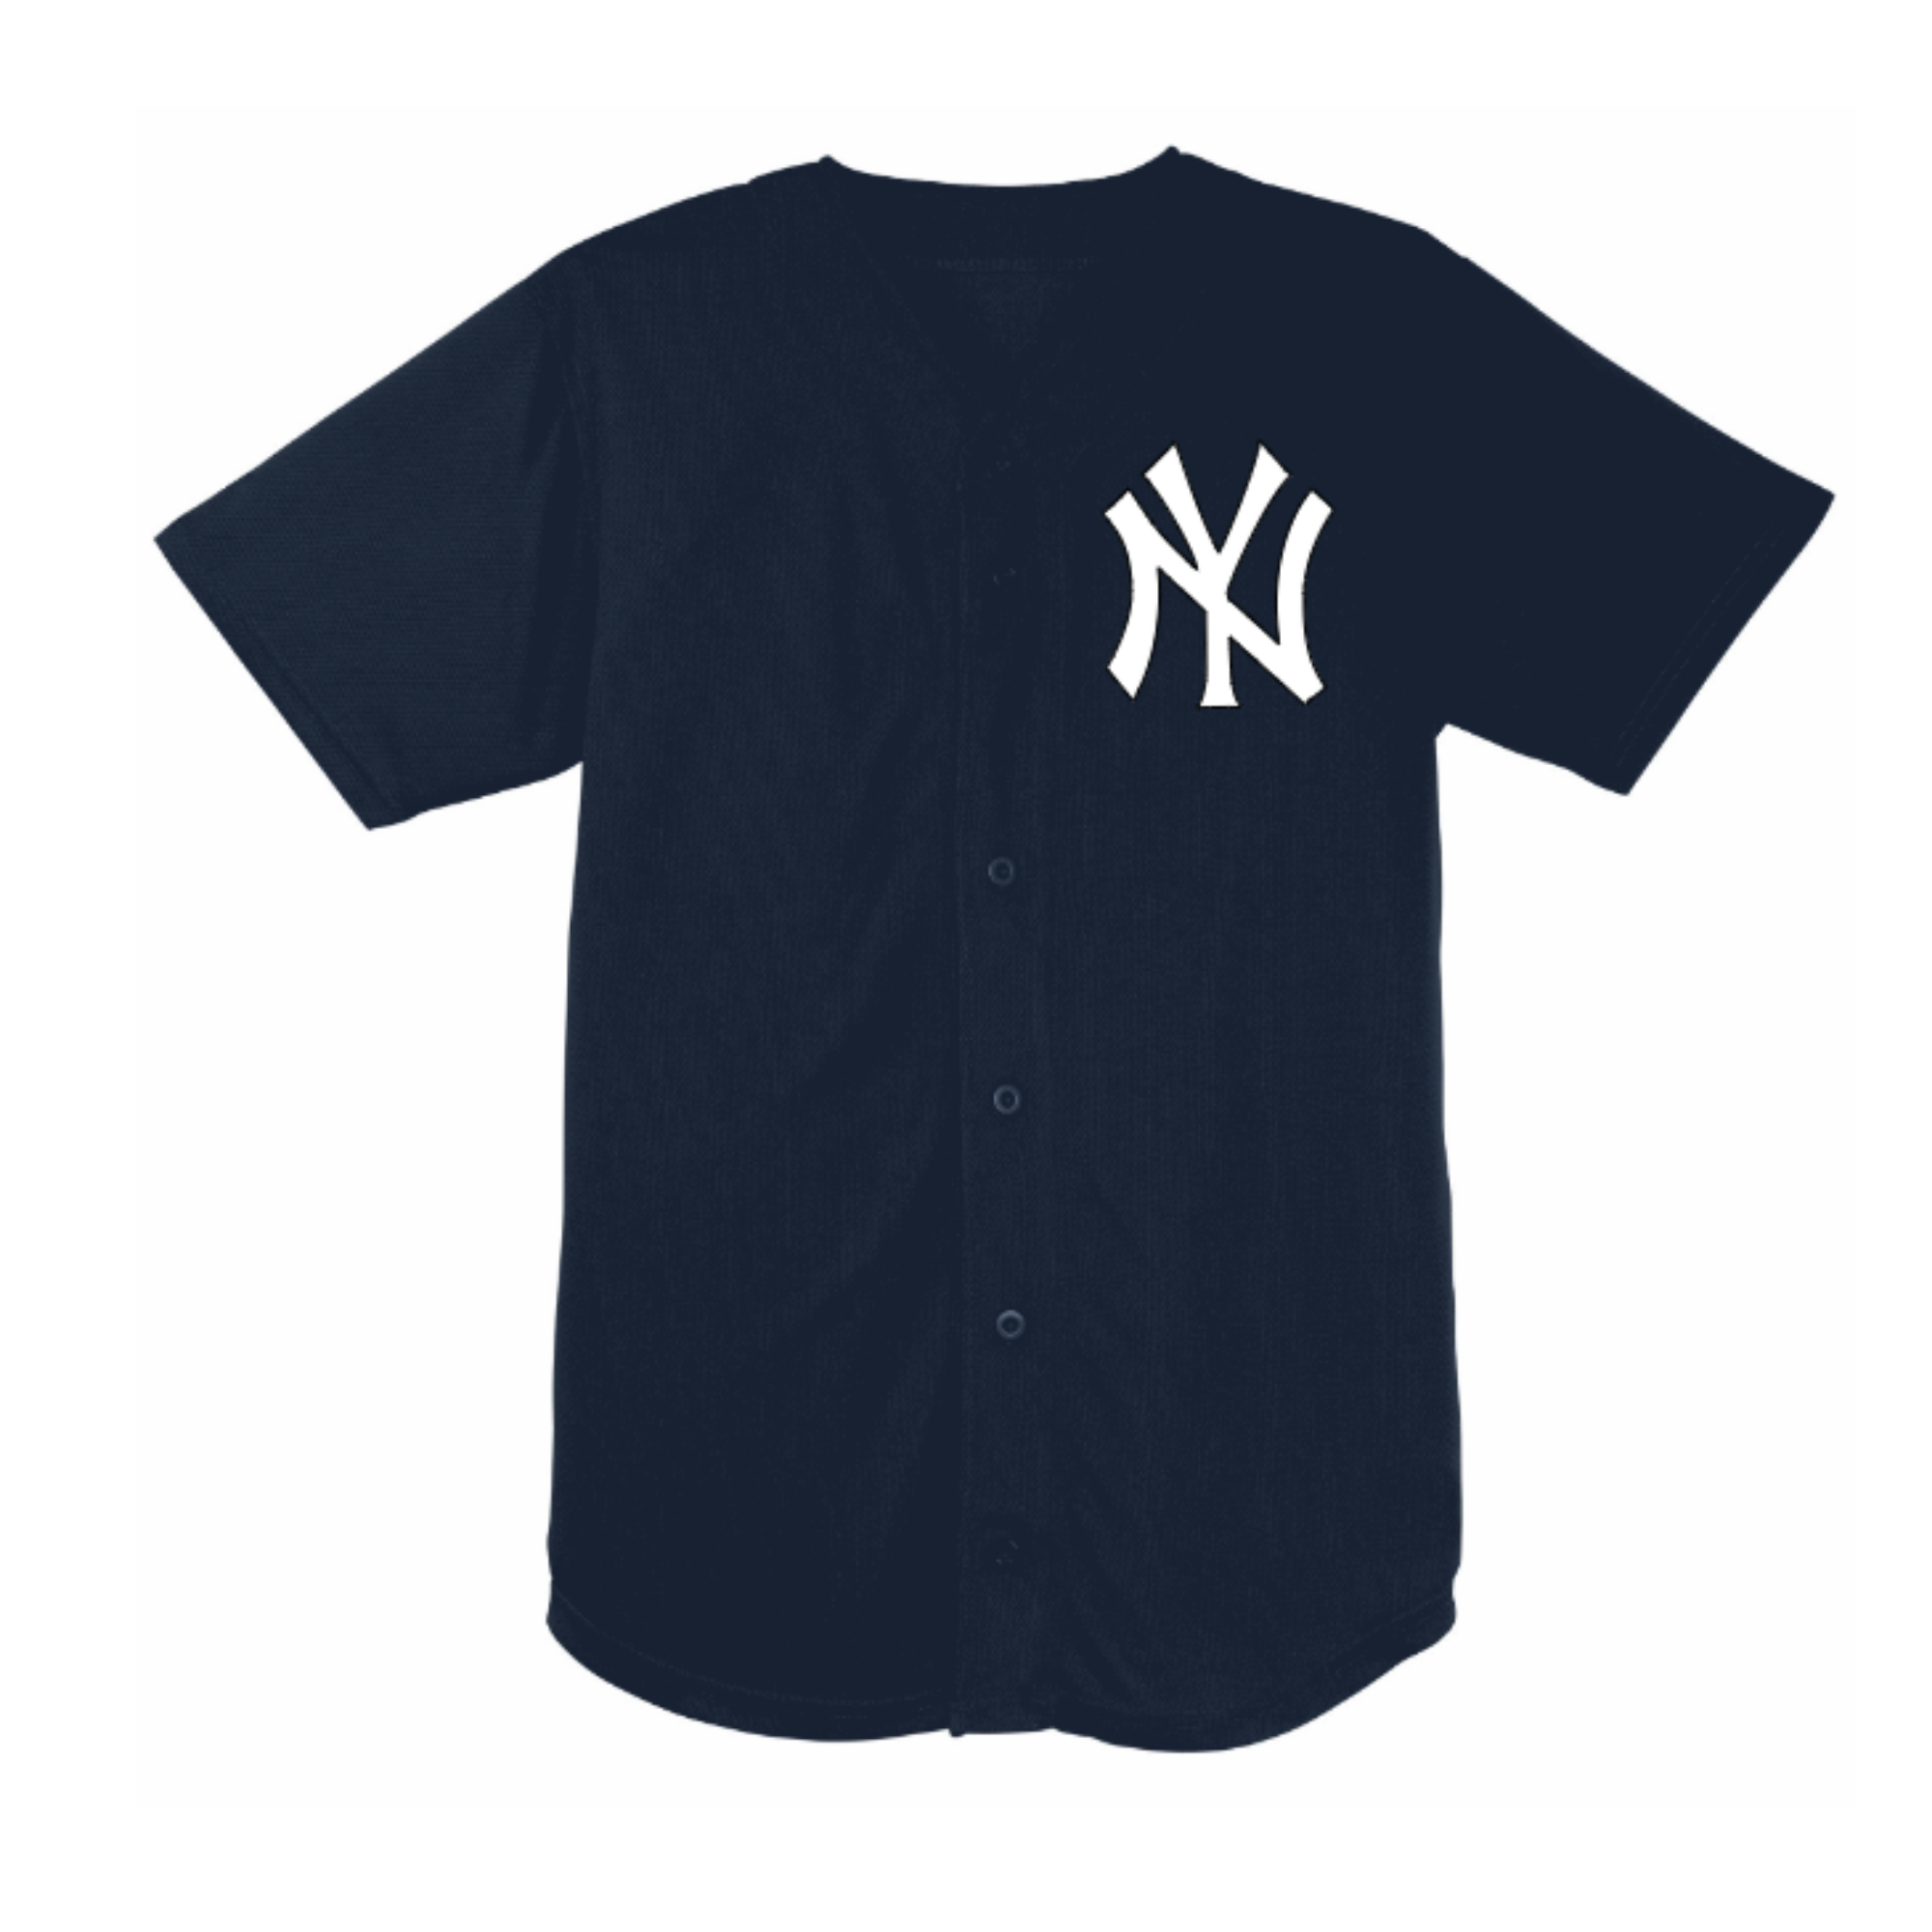 New York Yankees Apparel & Gear